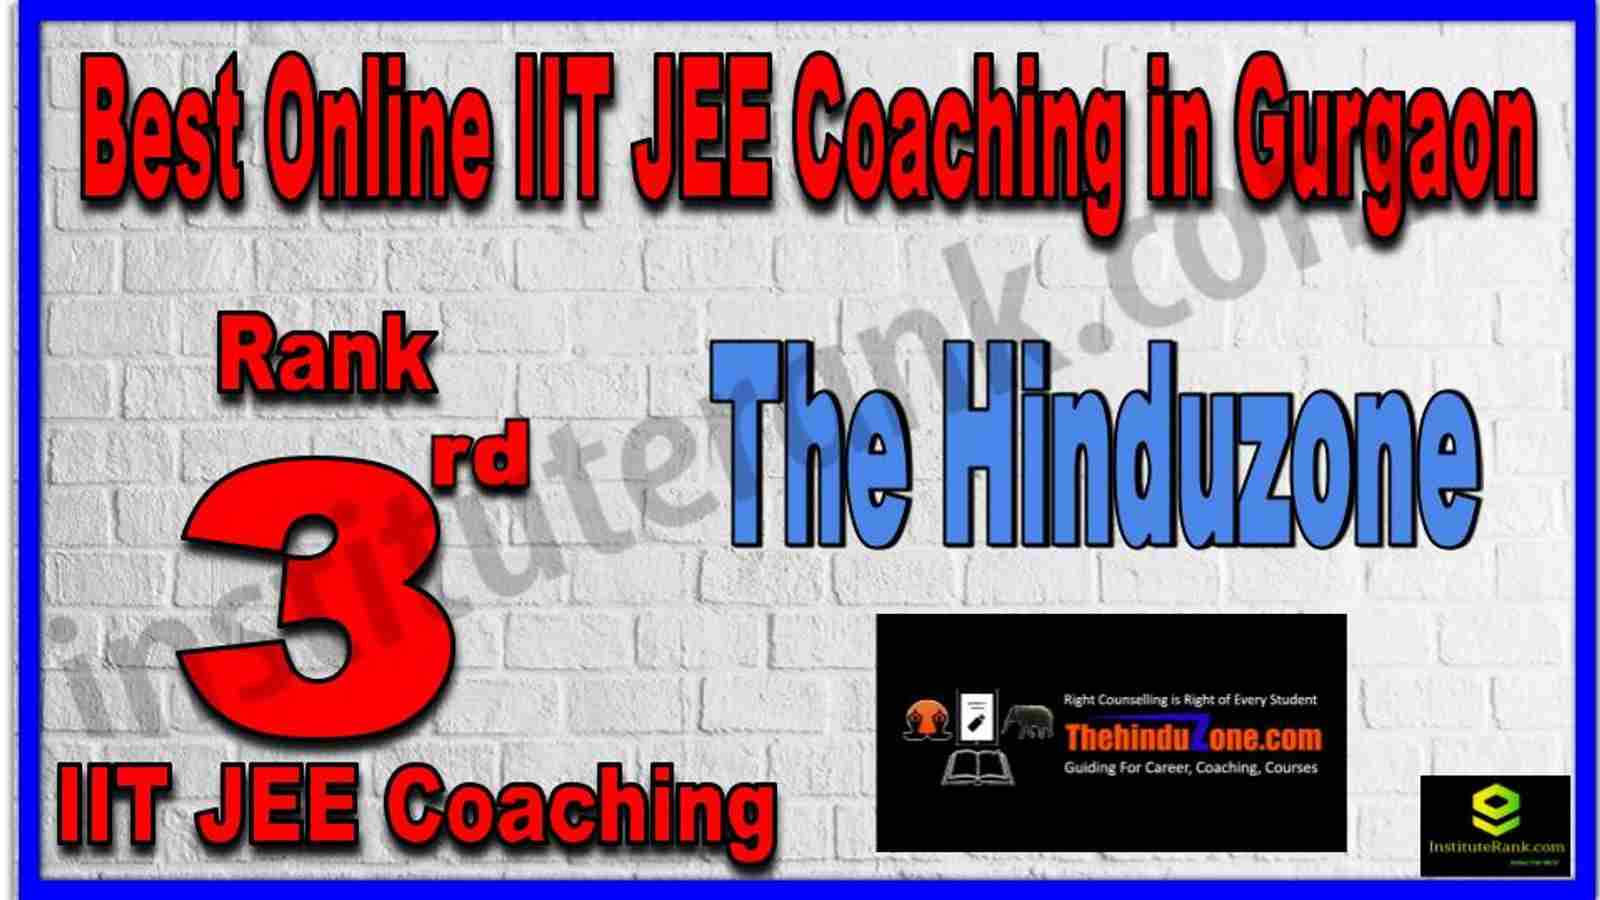 Rank 3rd Best Online IIT JEE Coaching in Gurgaon